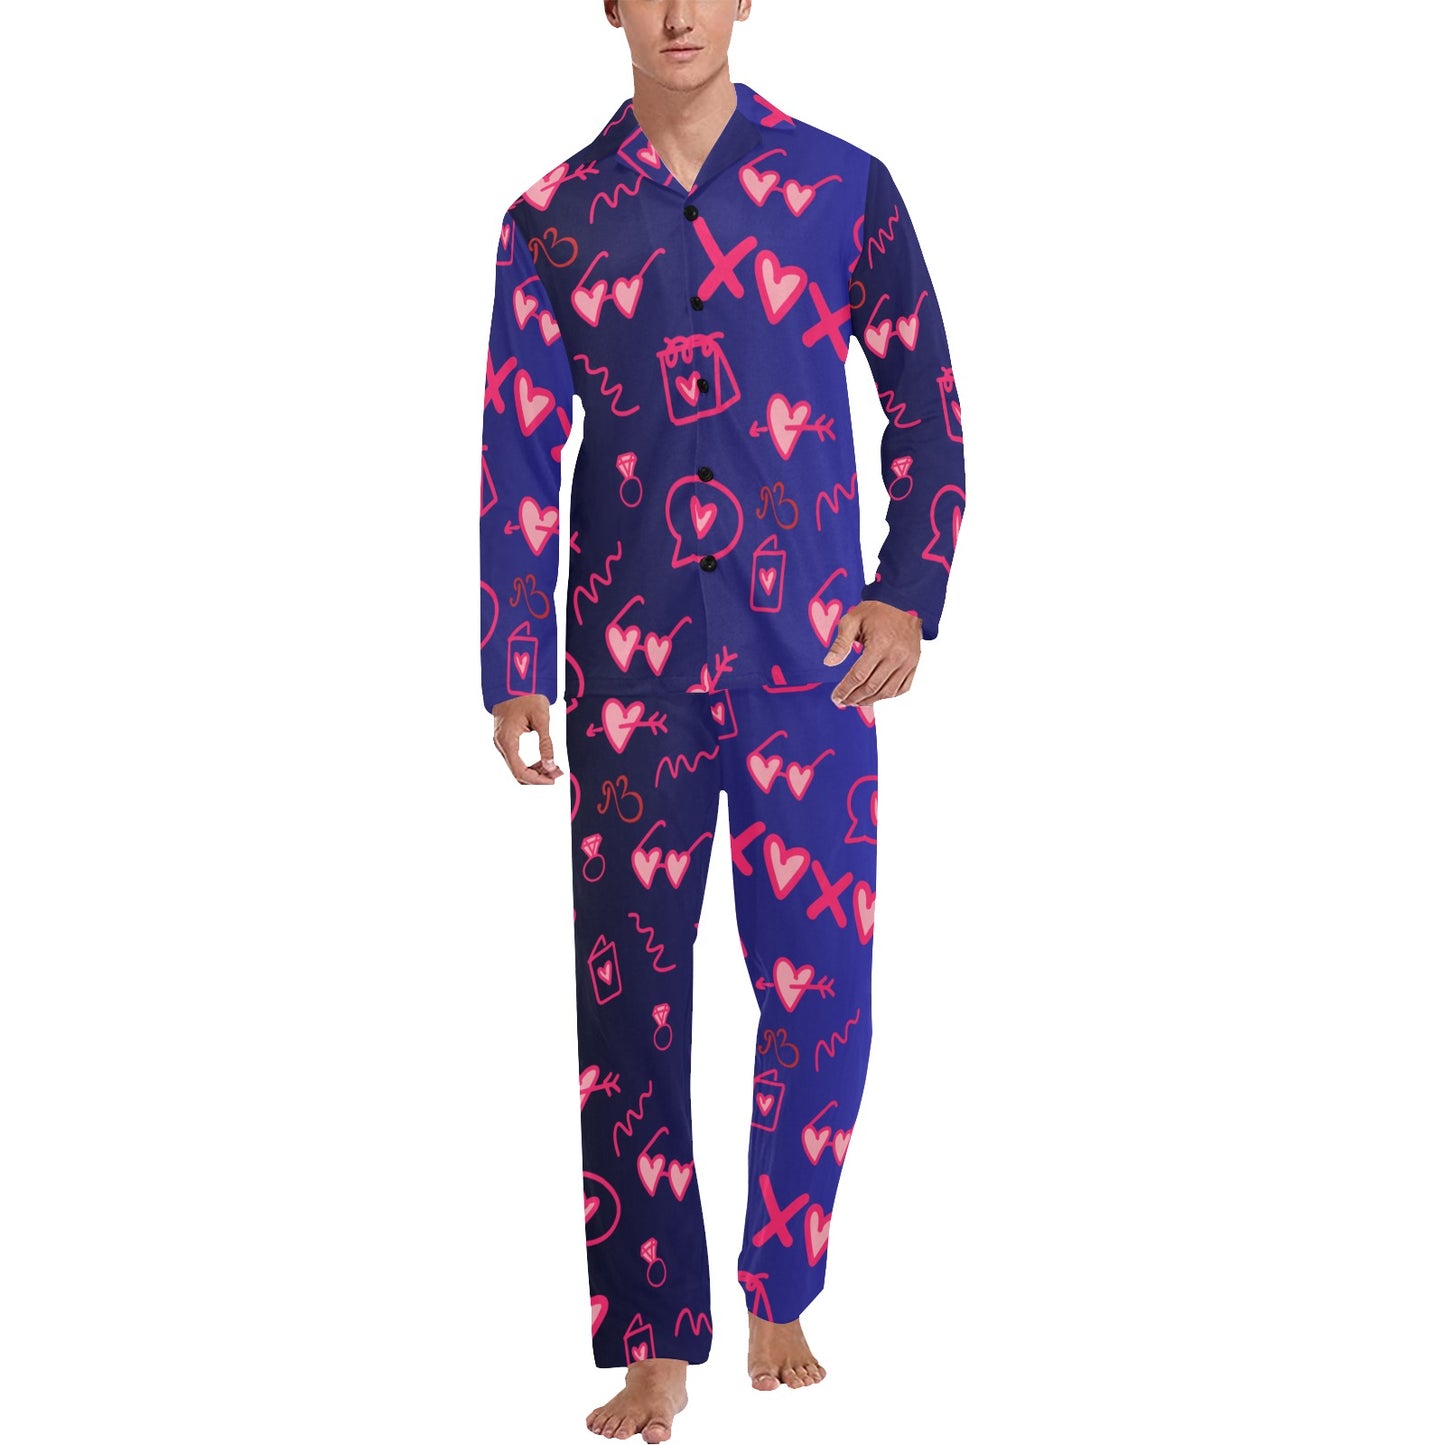 Love Heart XOXO Men's Long Sleeve Pyjamas Set